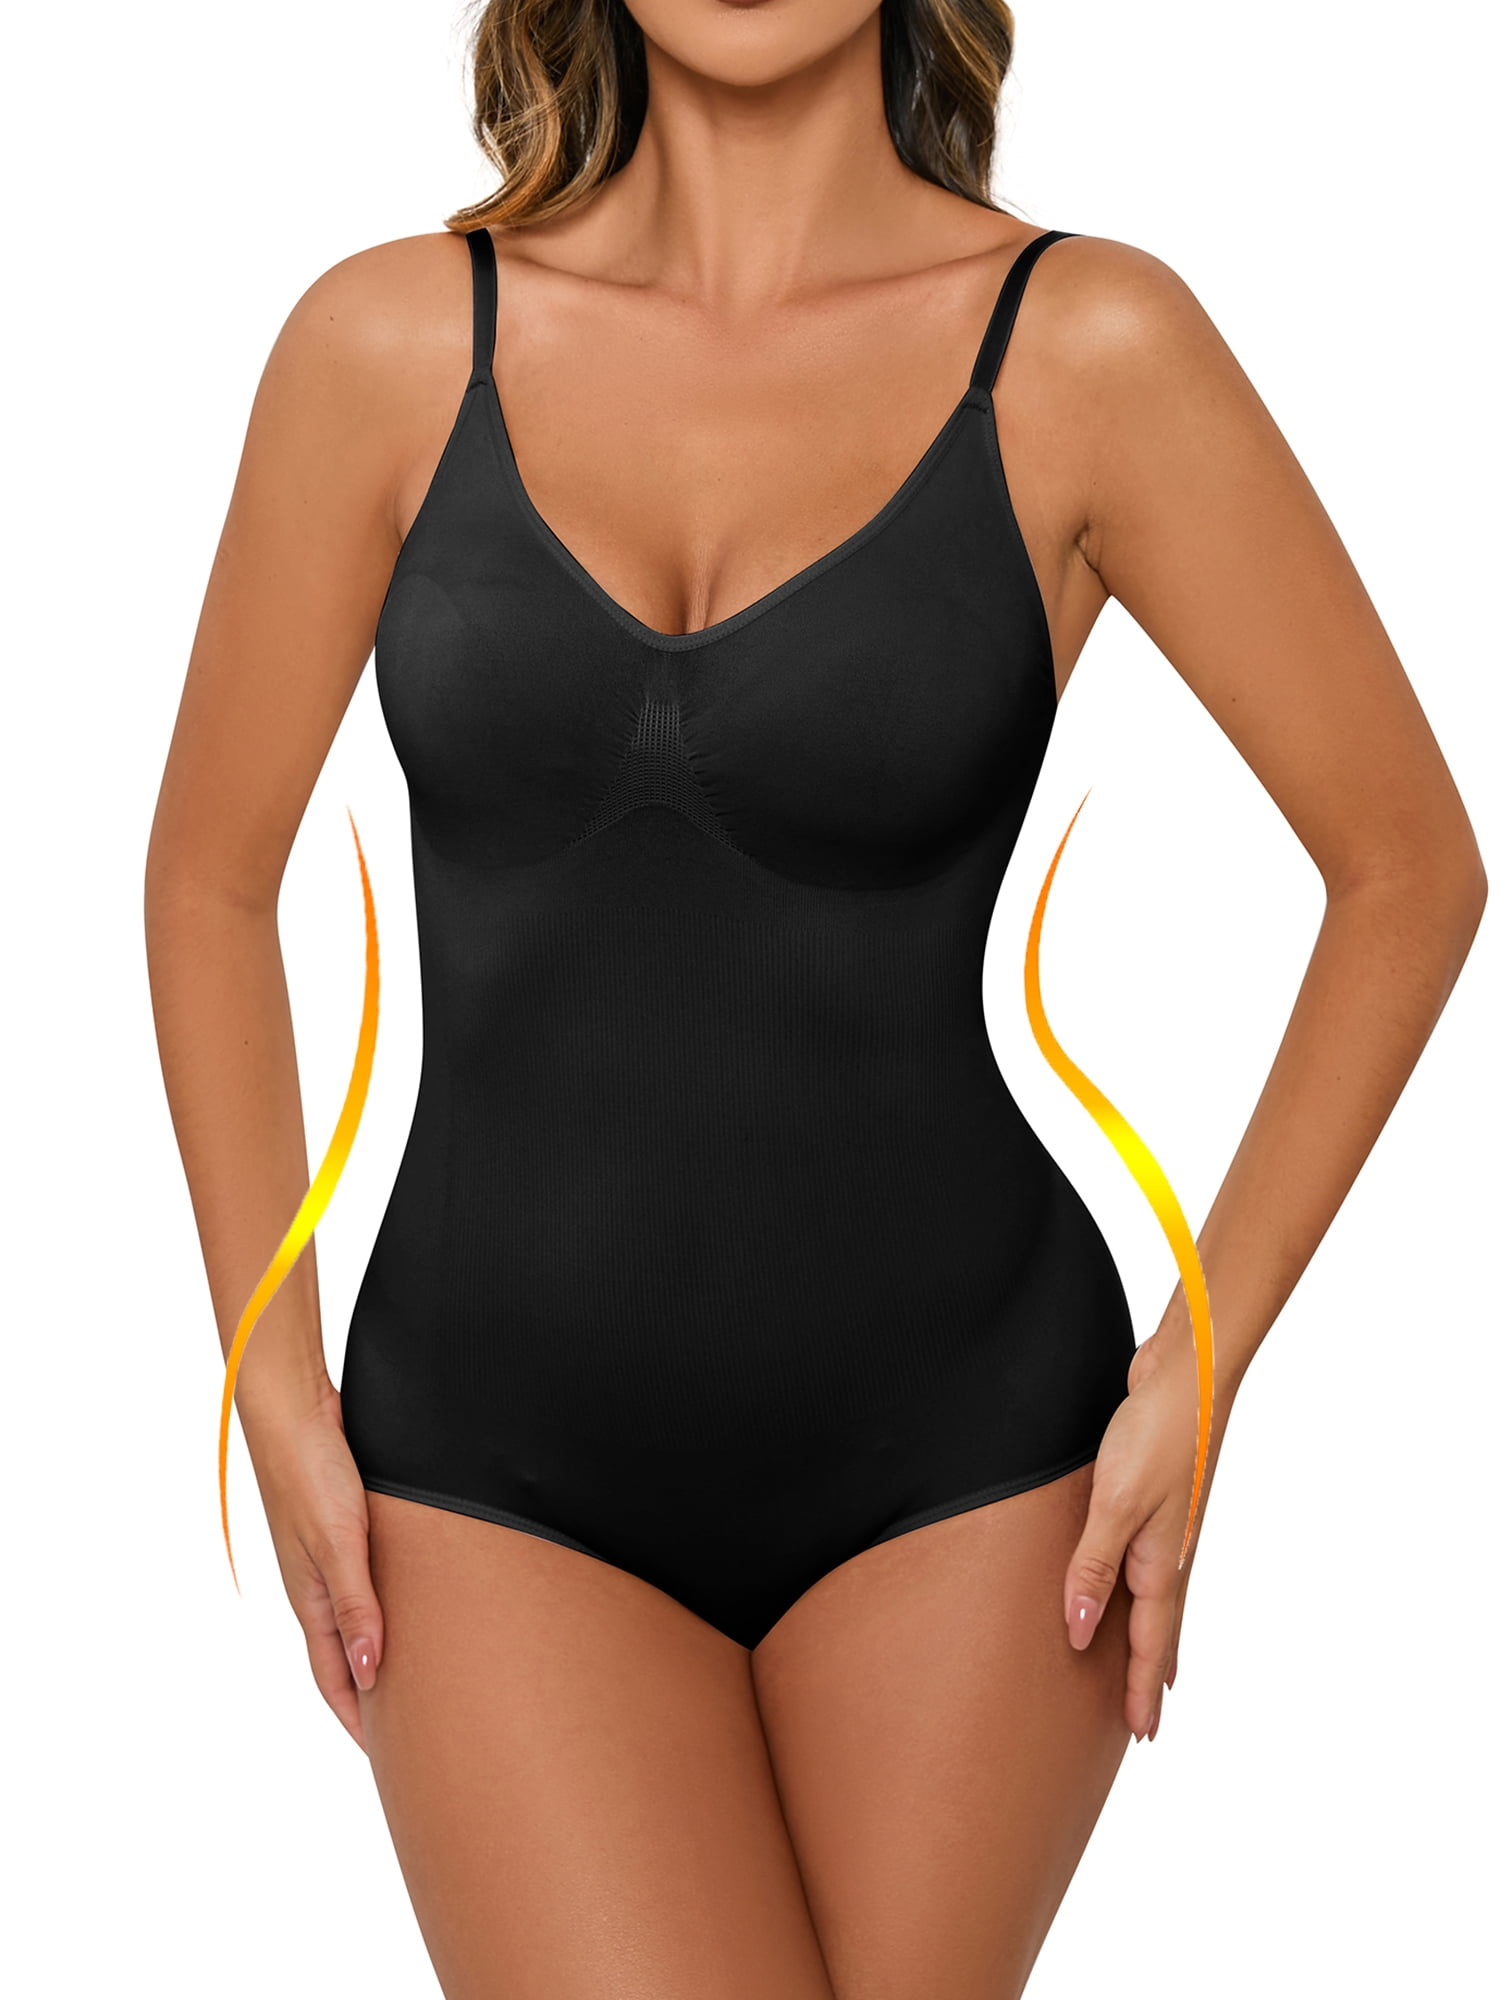 Skims Buywomen's Firm Control Slimming Bodysuit - Wire-free Nylon